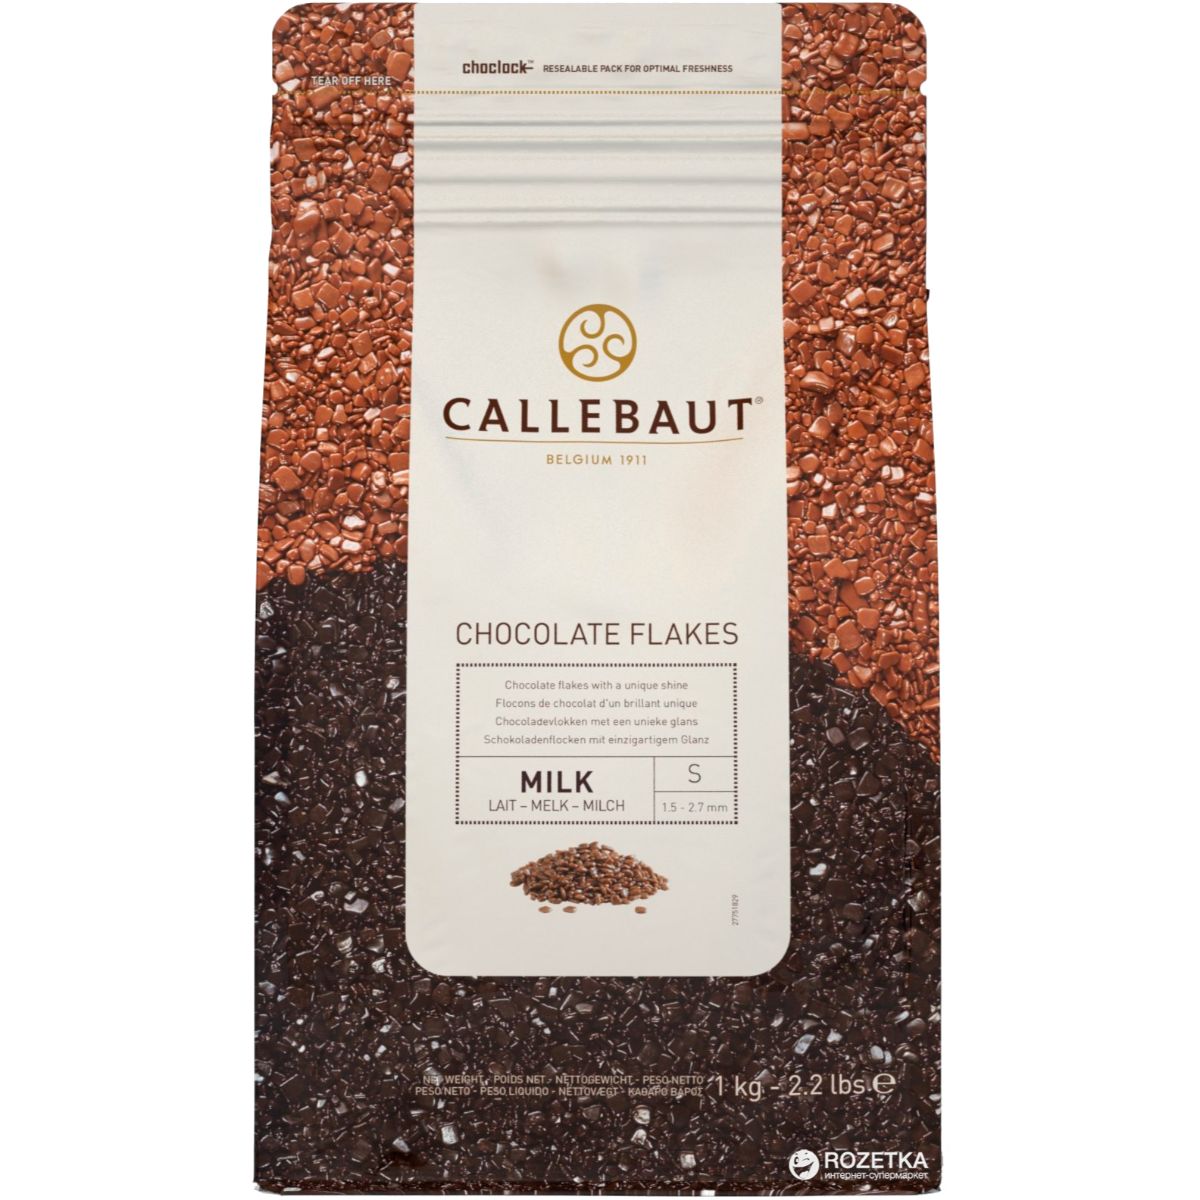 Callebaut Milk Chocolate Block 32% 1pc/cut - 2lb (approx